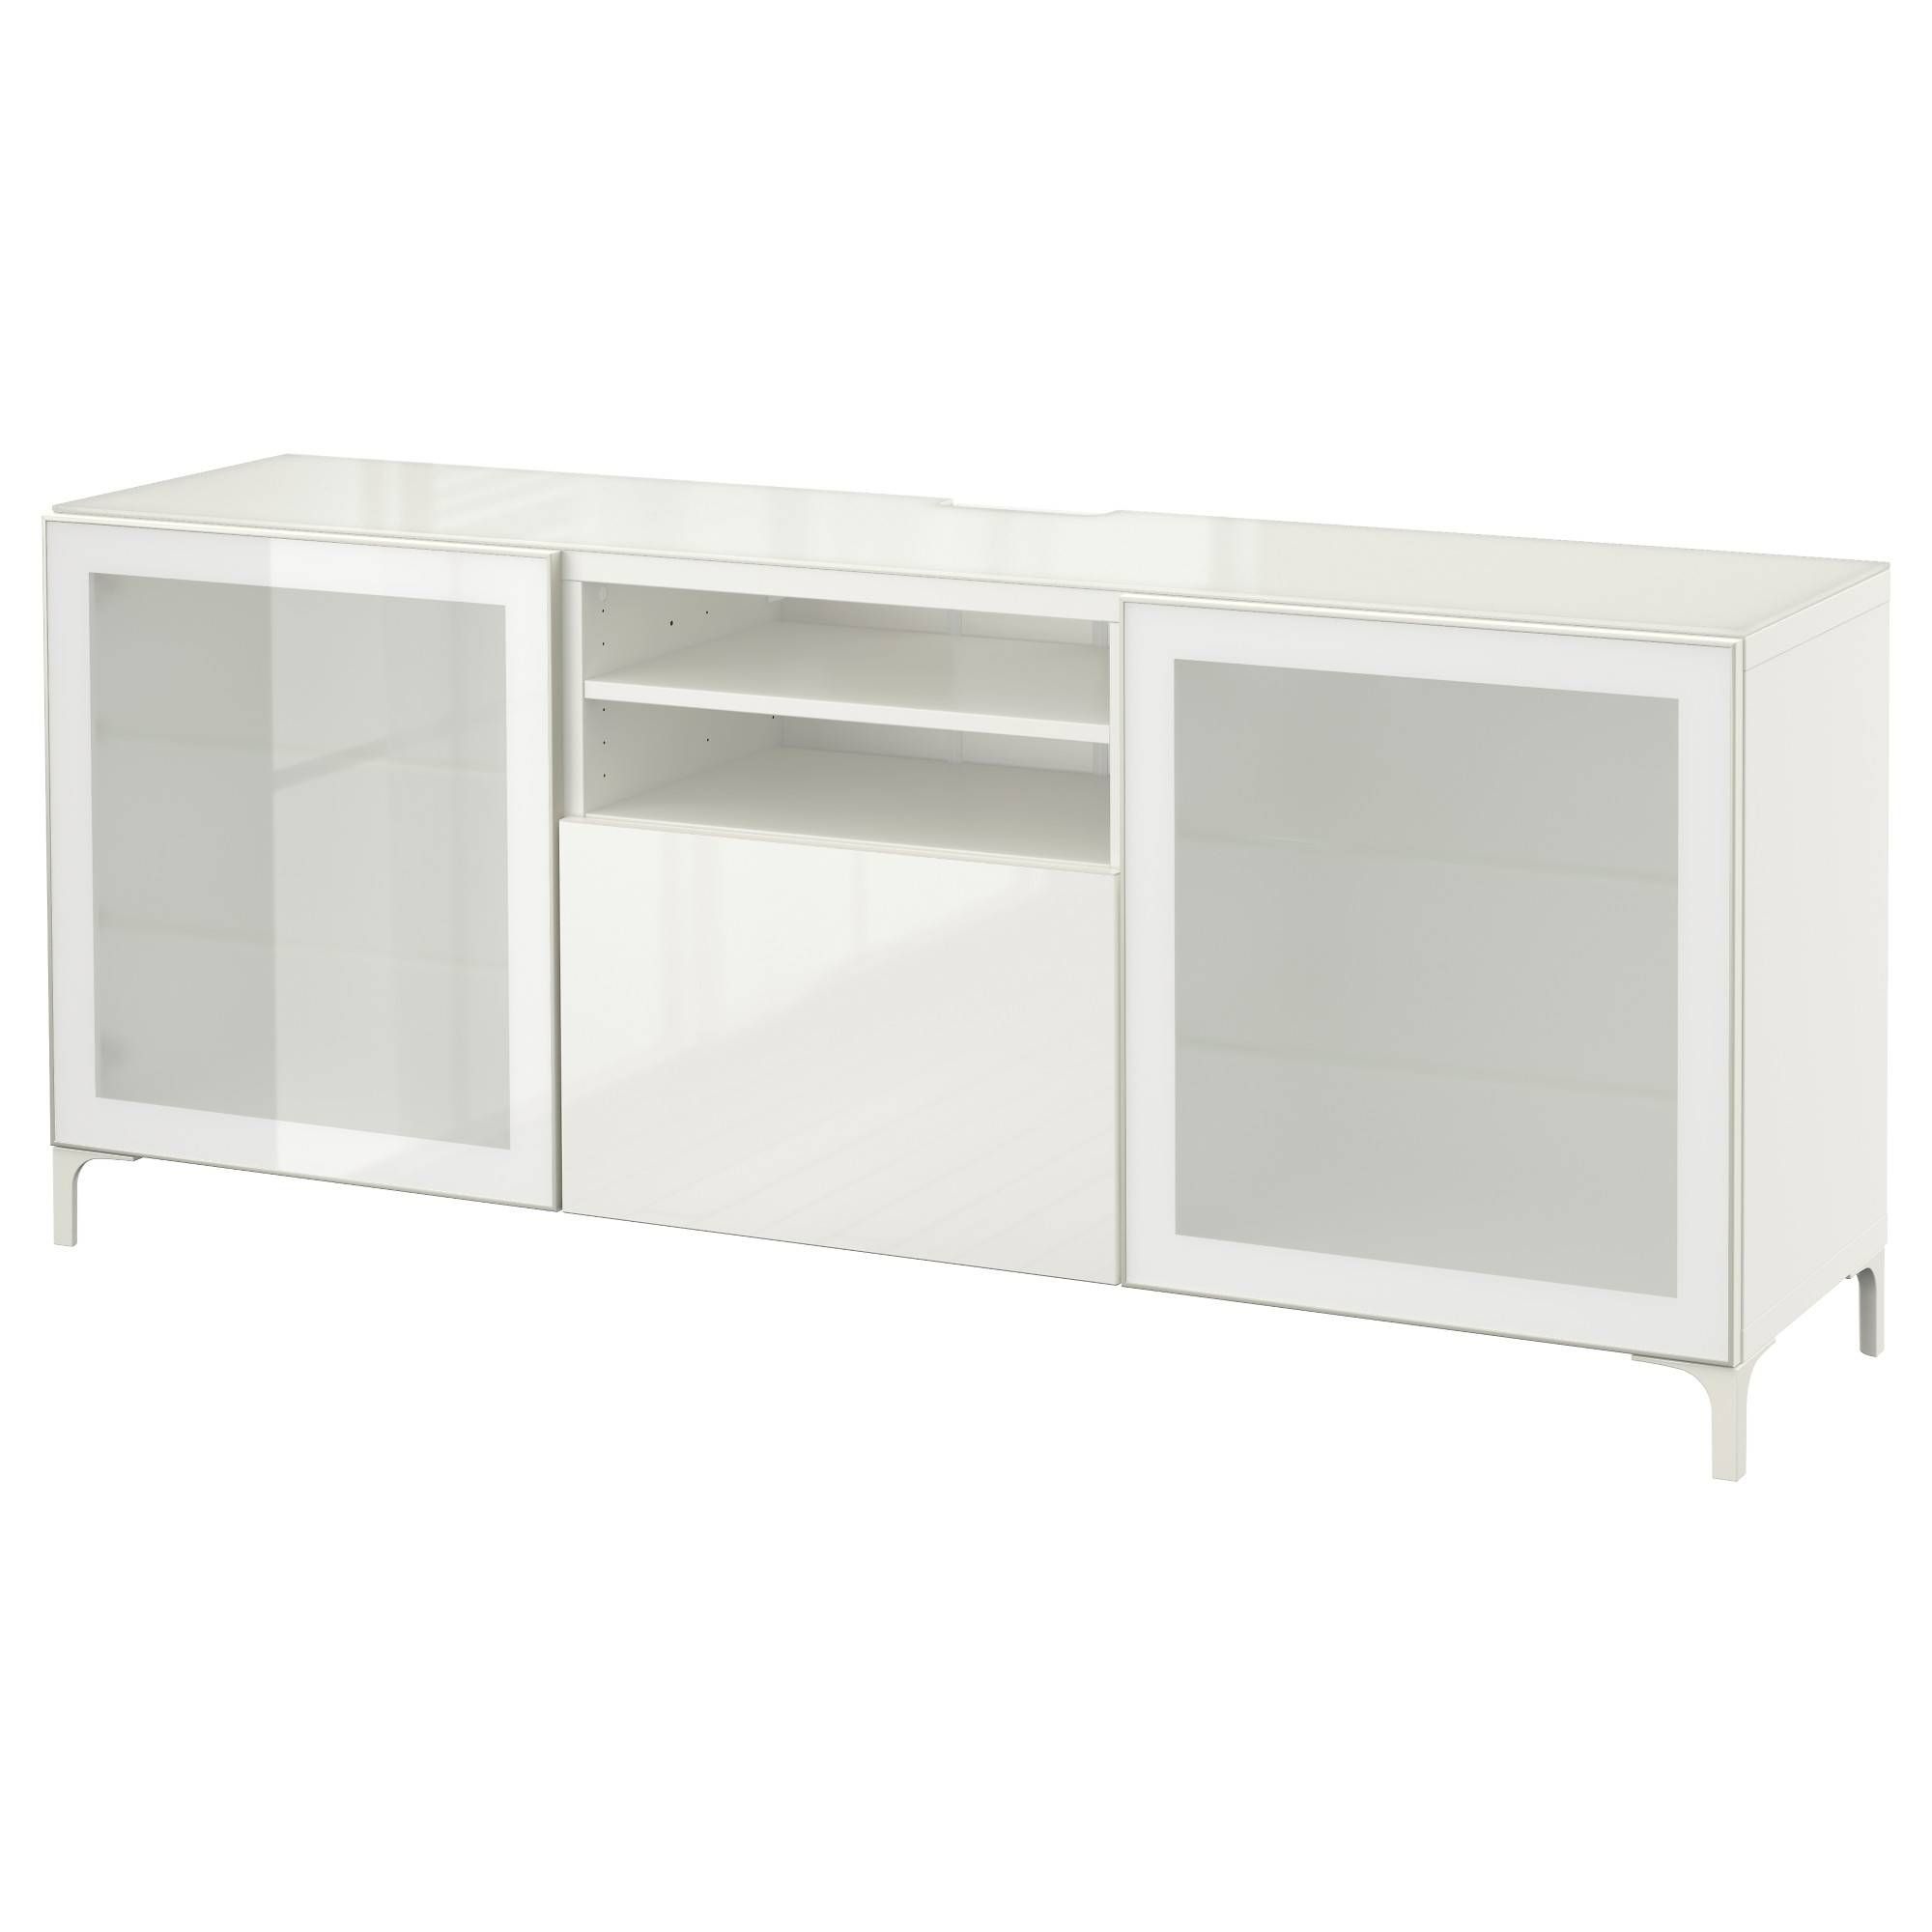 Bestå – Ikea Regarding White Glass Sideboards (View 11 of 15)